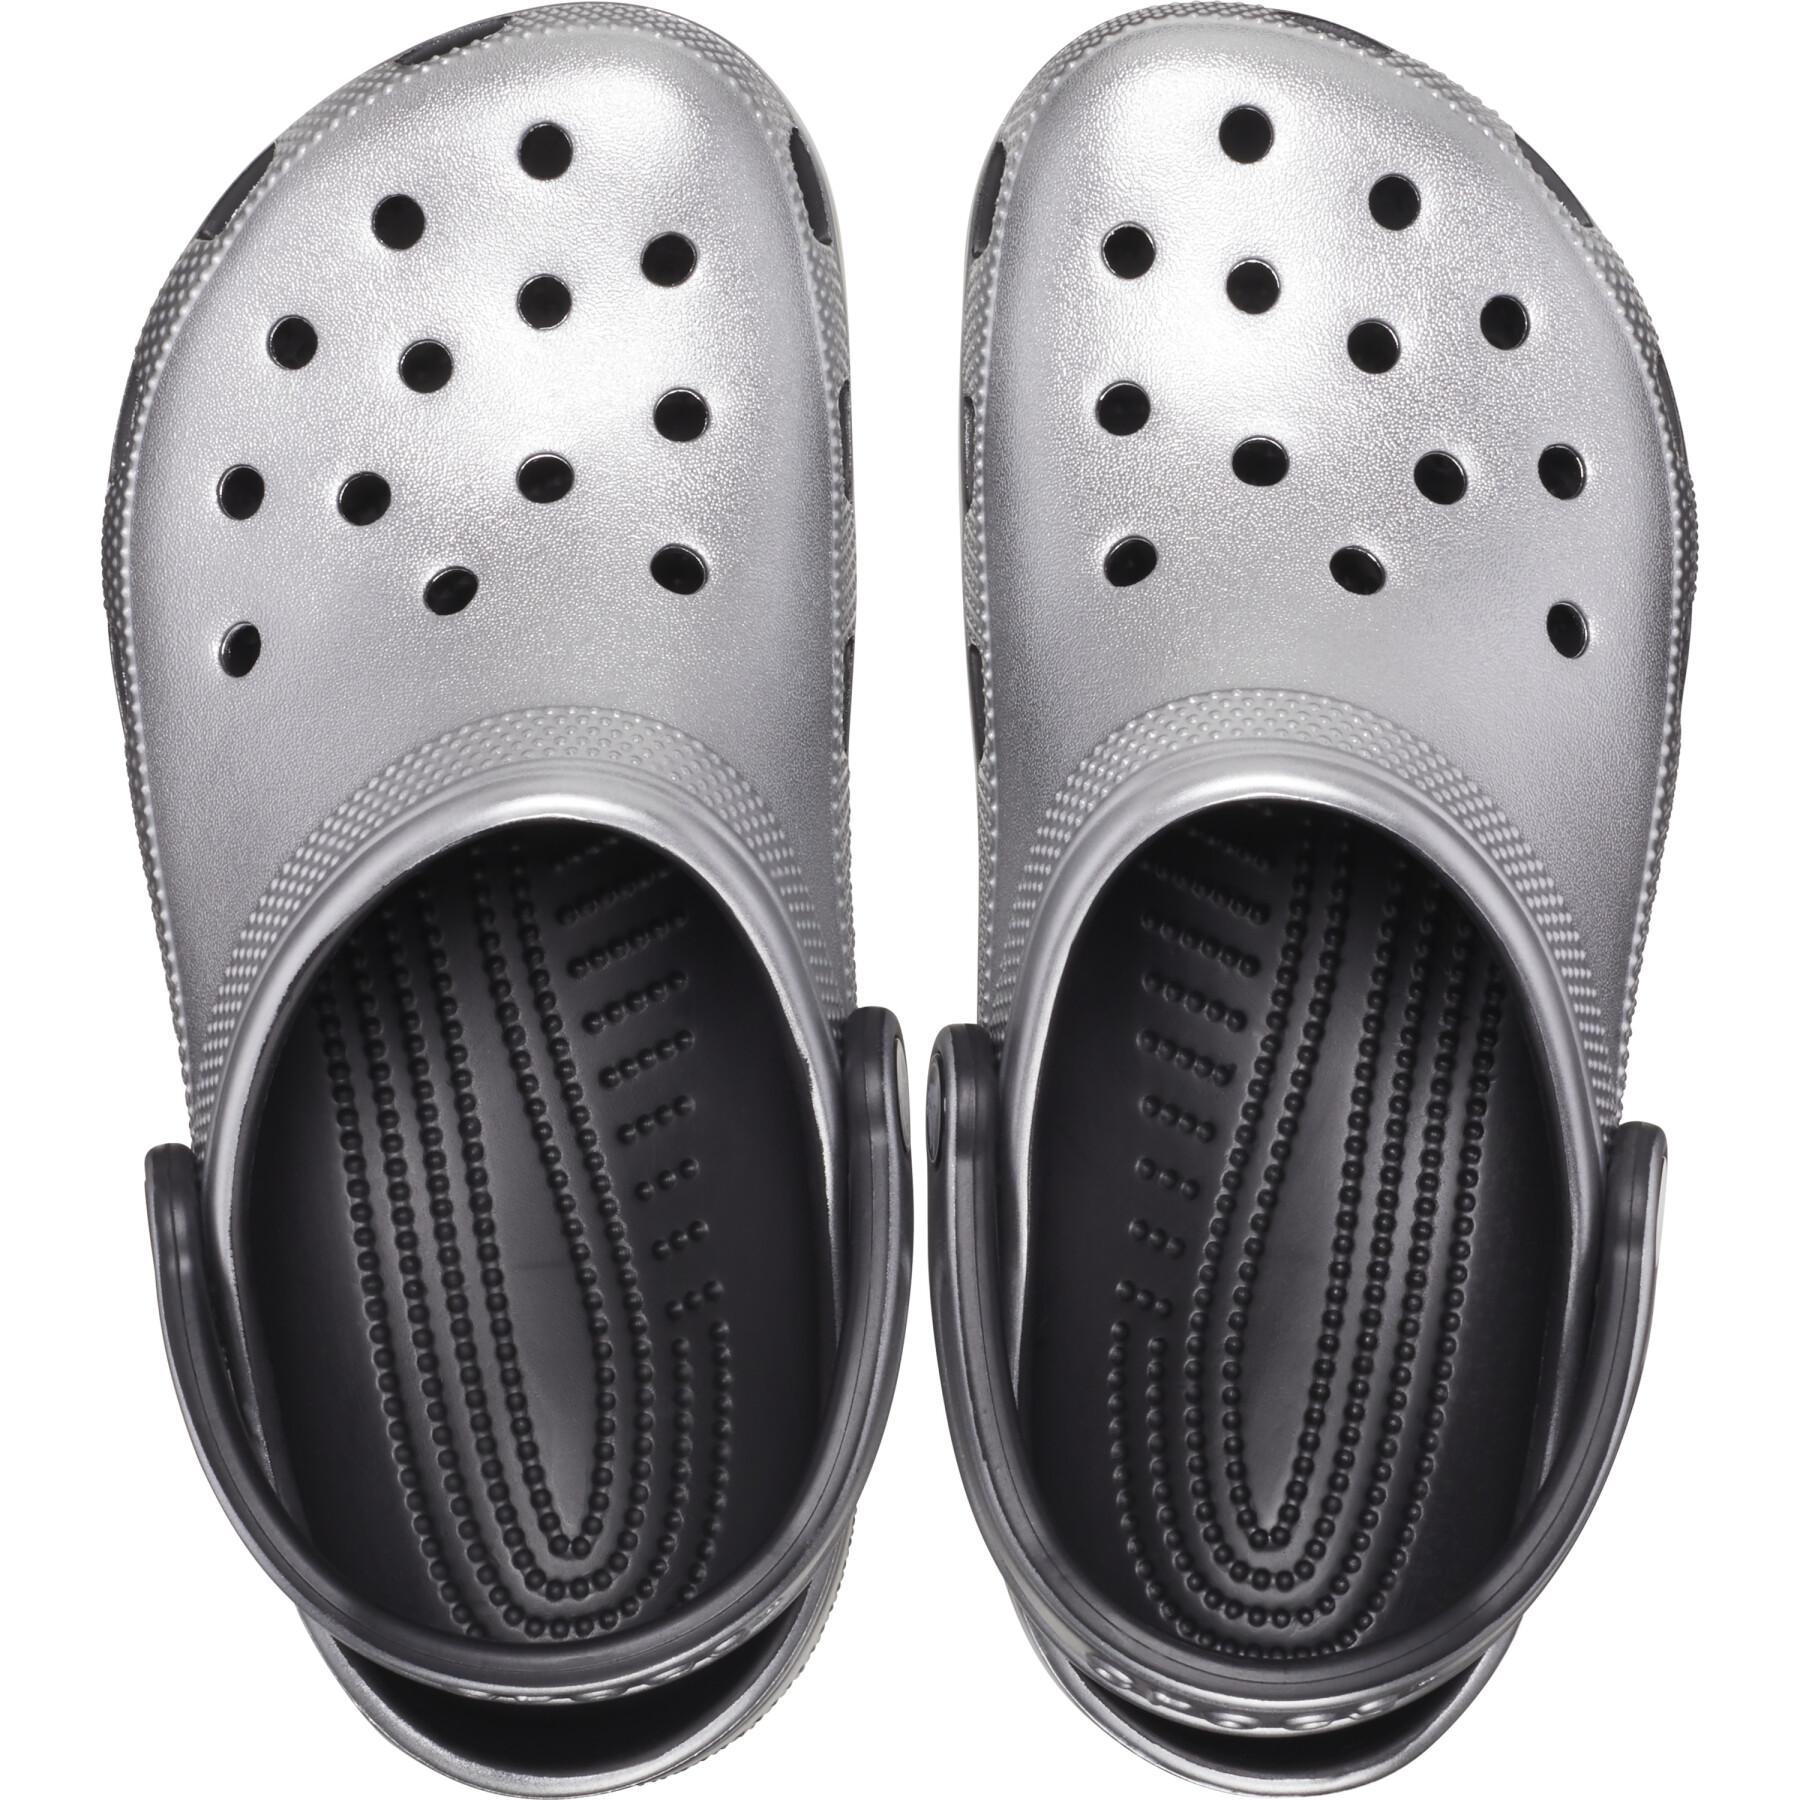 Clogs Crocs Classic